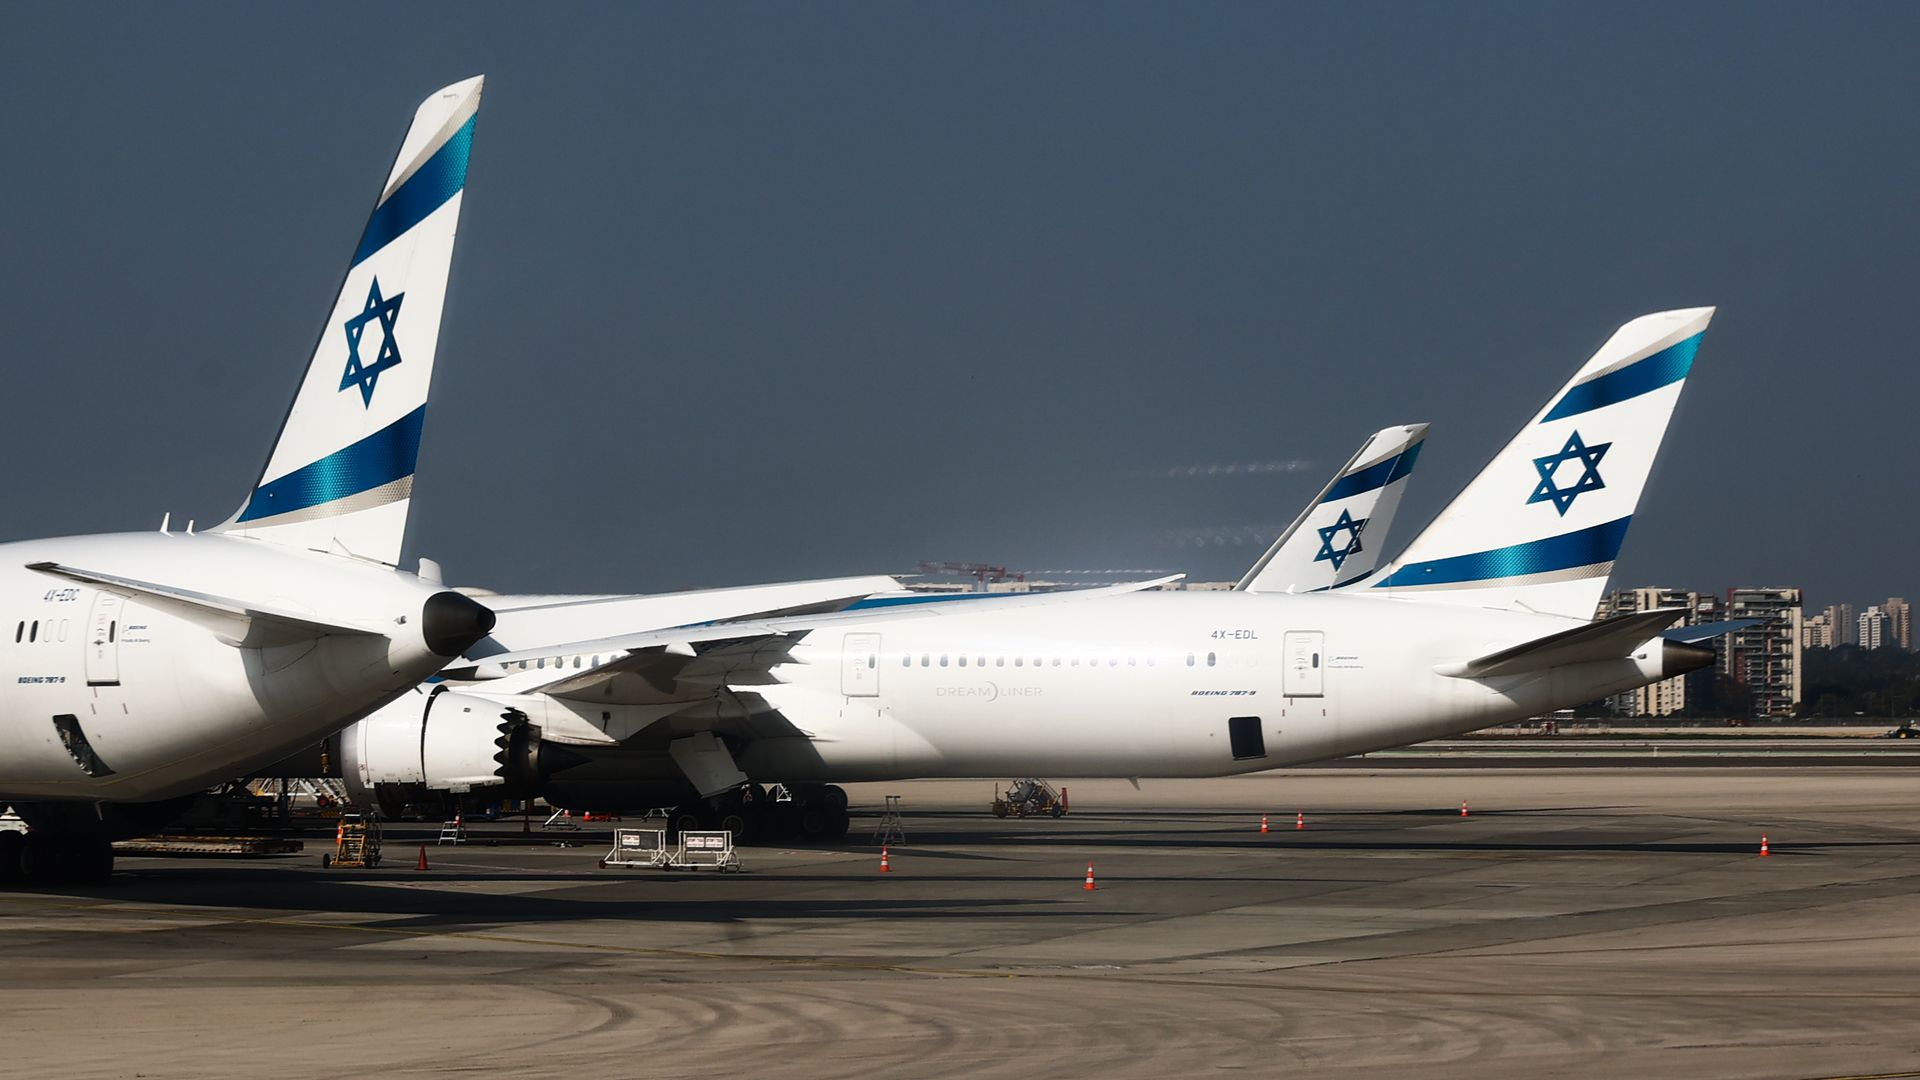 El Al planes are seen at the Ben Gurion International Airport in Tel Aviv on December 31, 2022